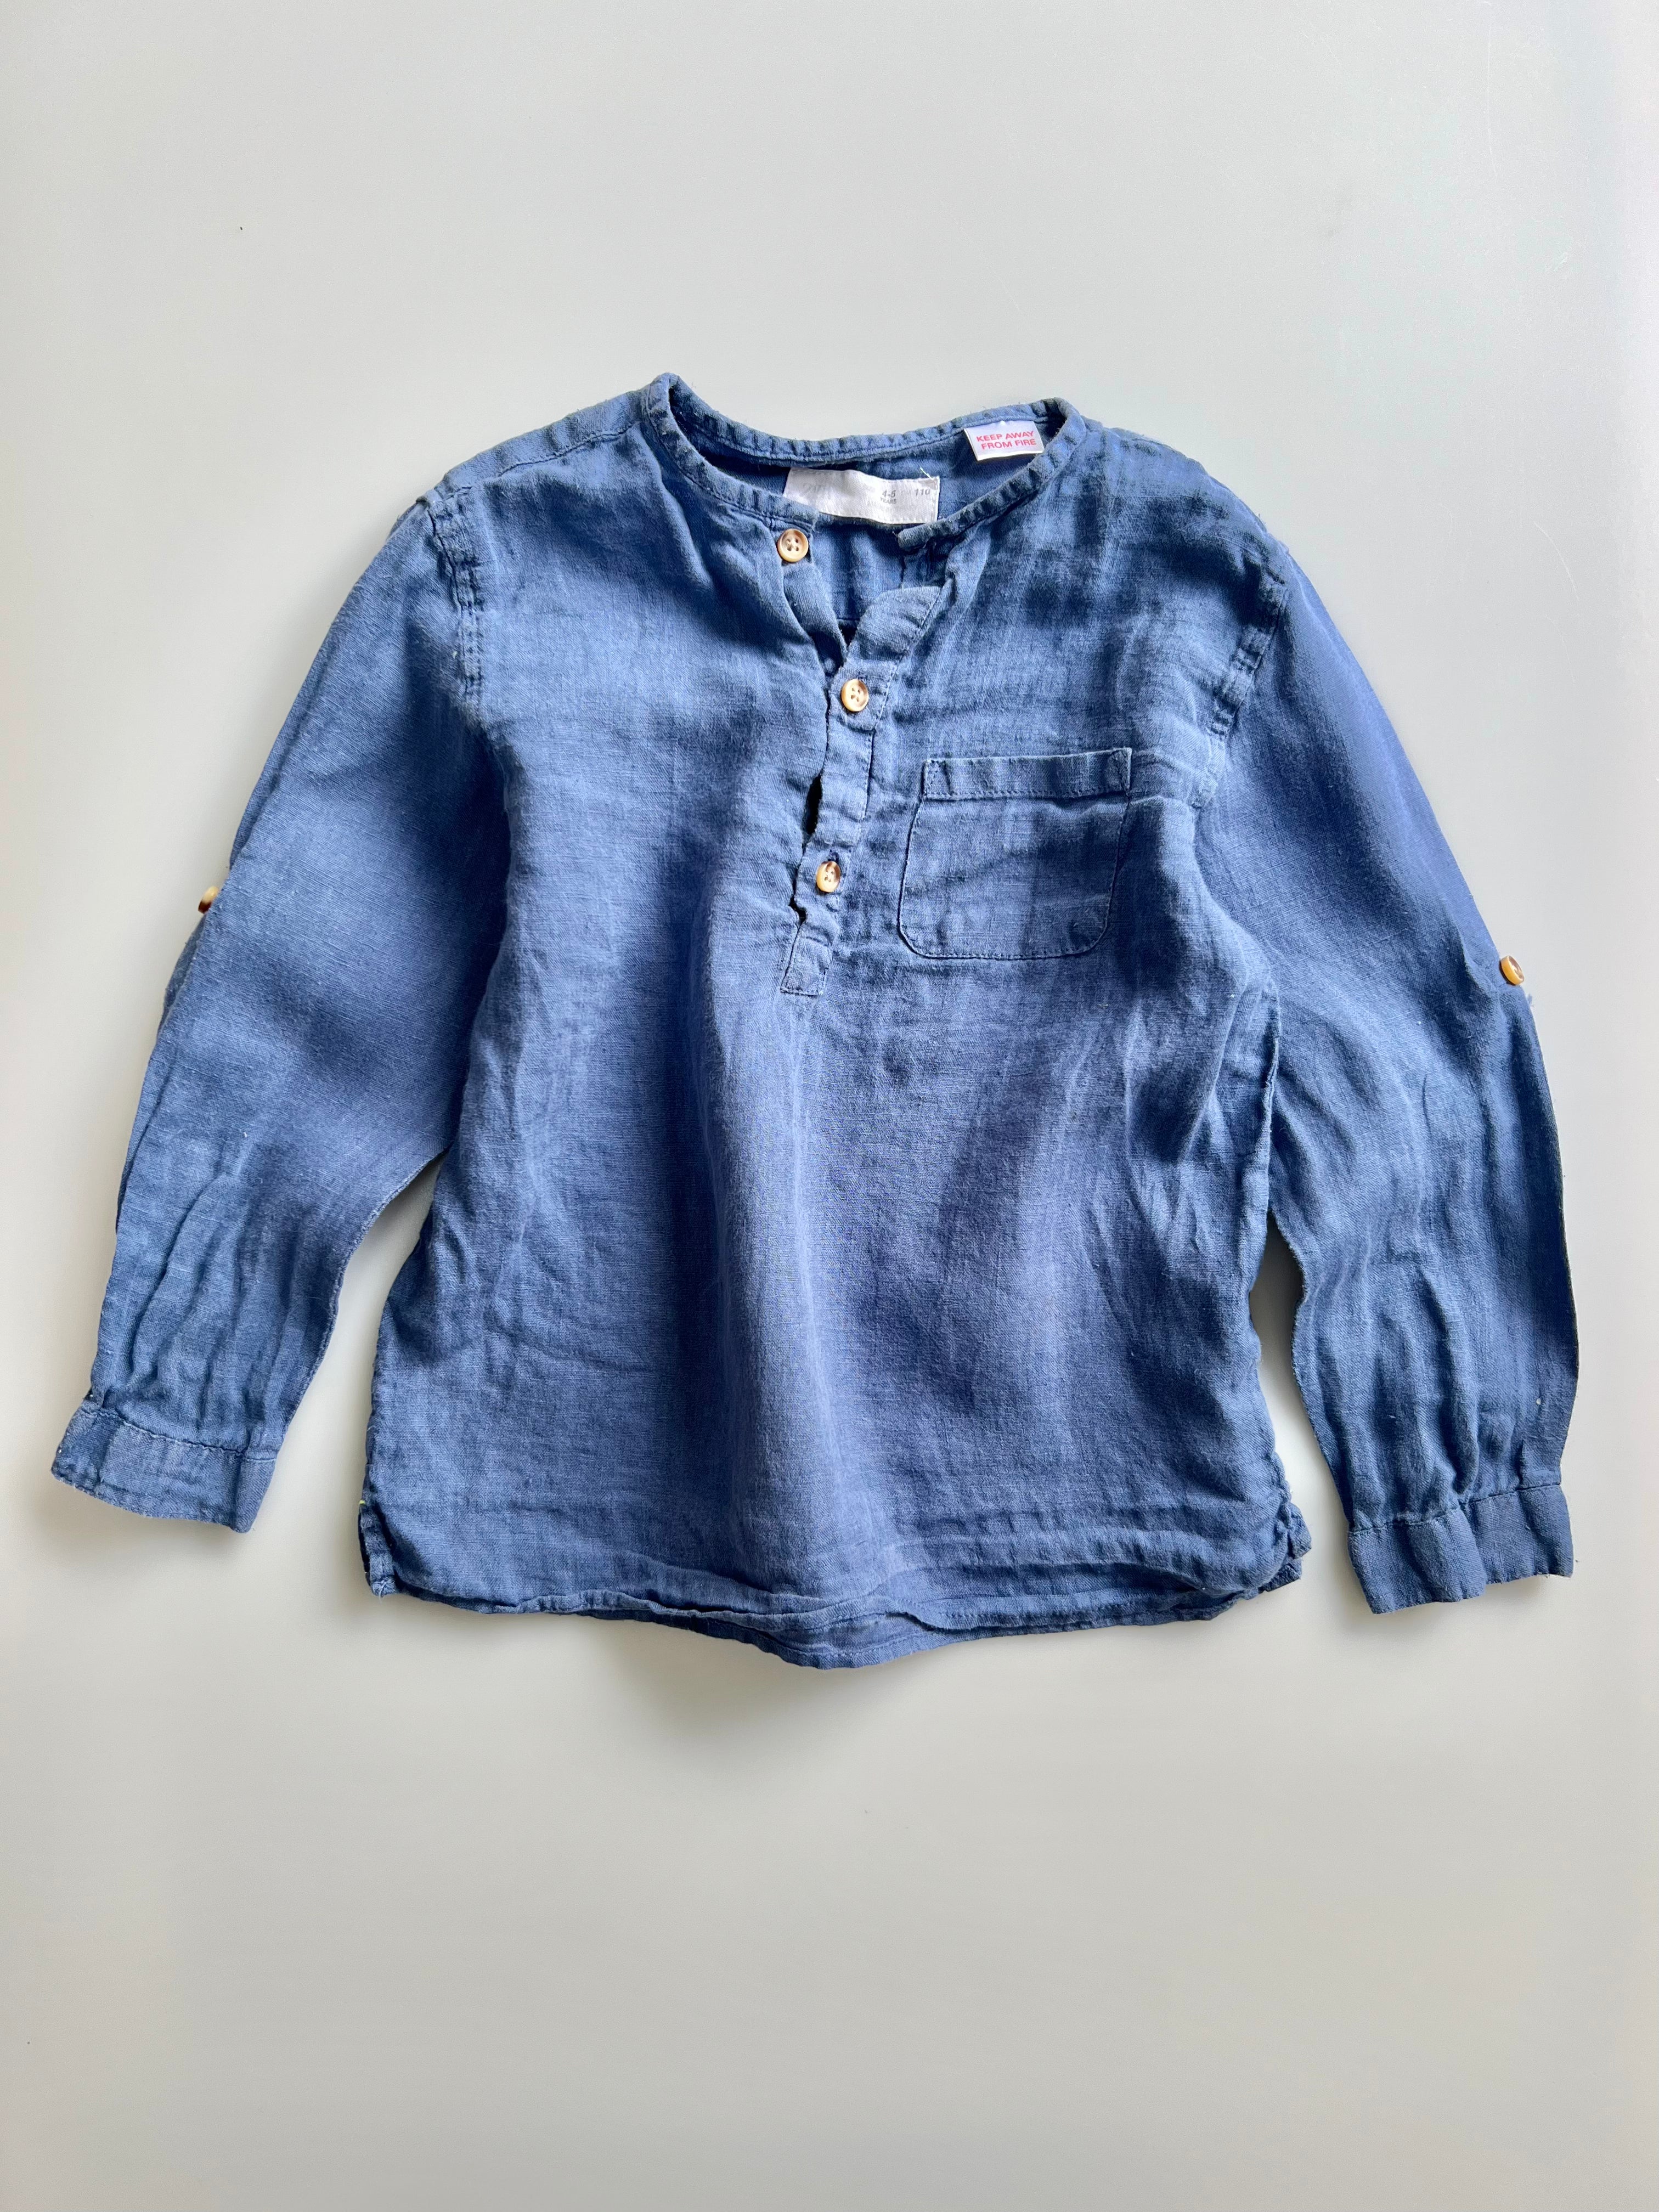 Zara Blue Linen Tunic Age 4-5